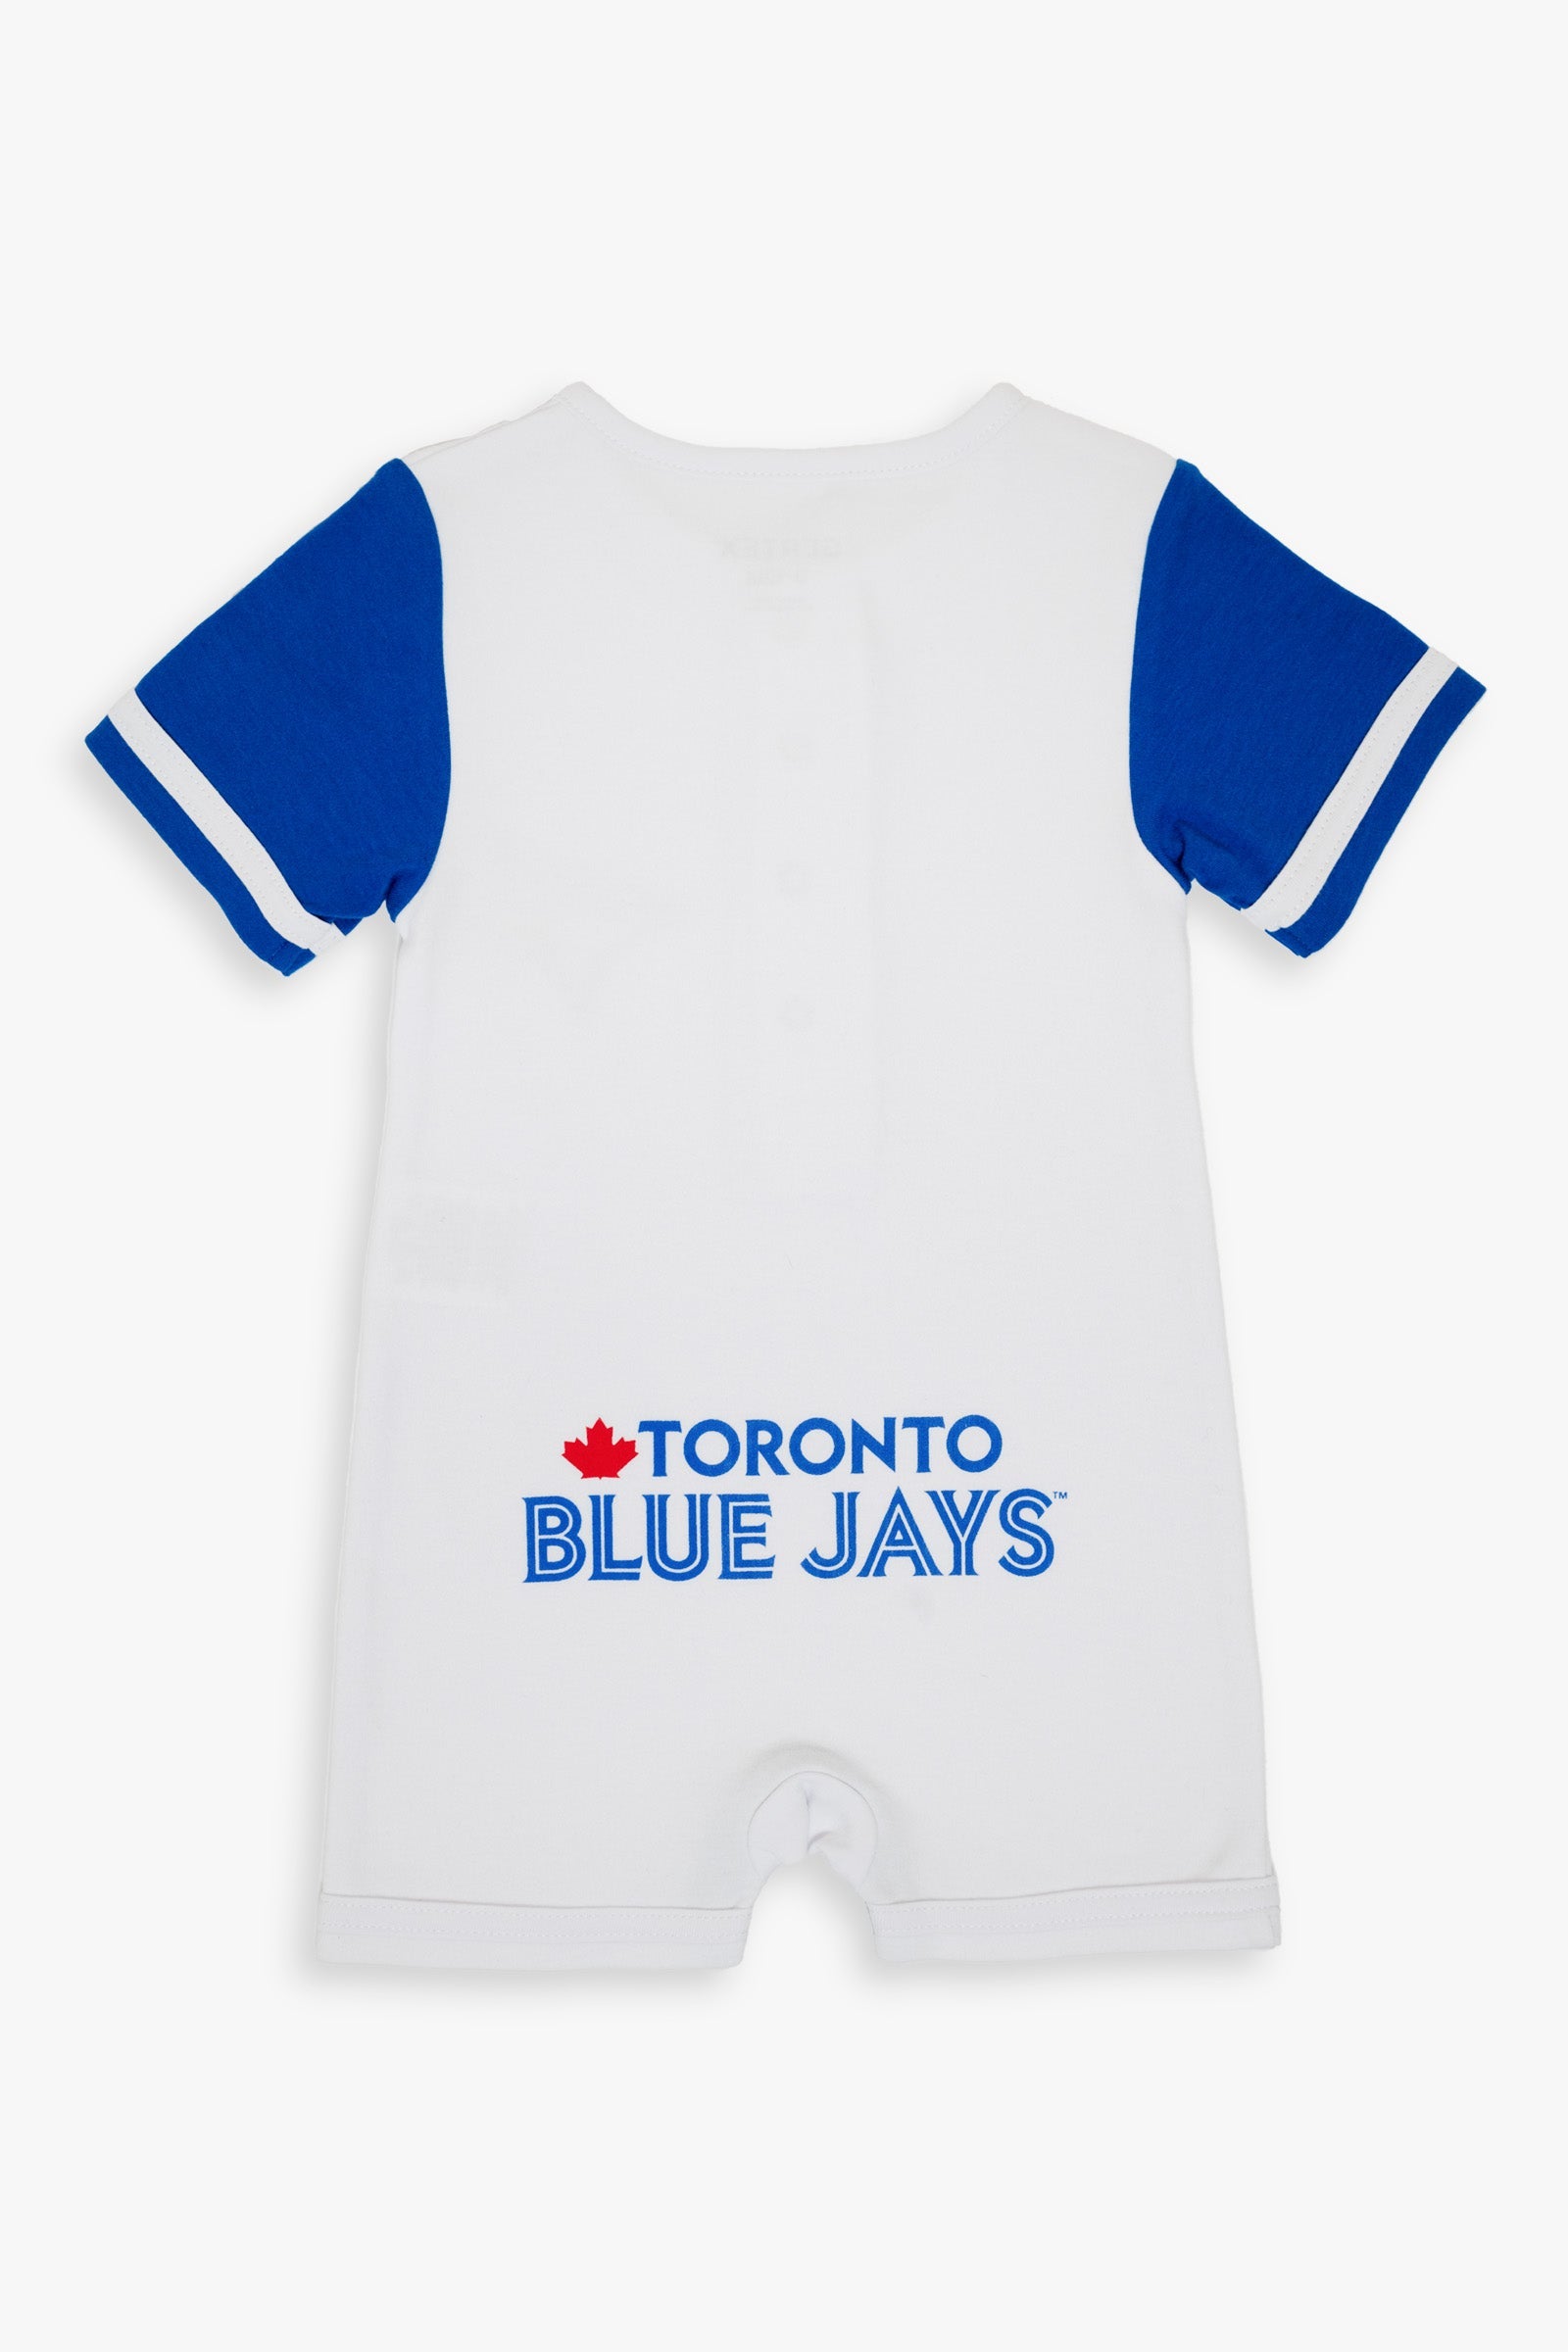 Official Toronto Blue Jays Gear, Blue Jays Jerseys, Store, Toronto Pro  Shop, Apparel